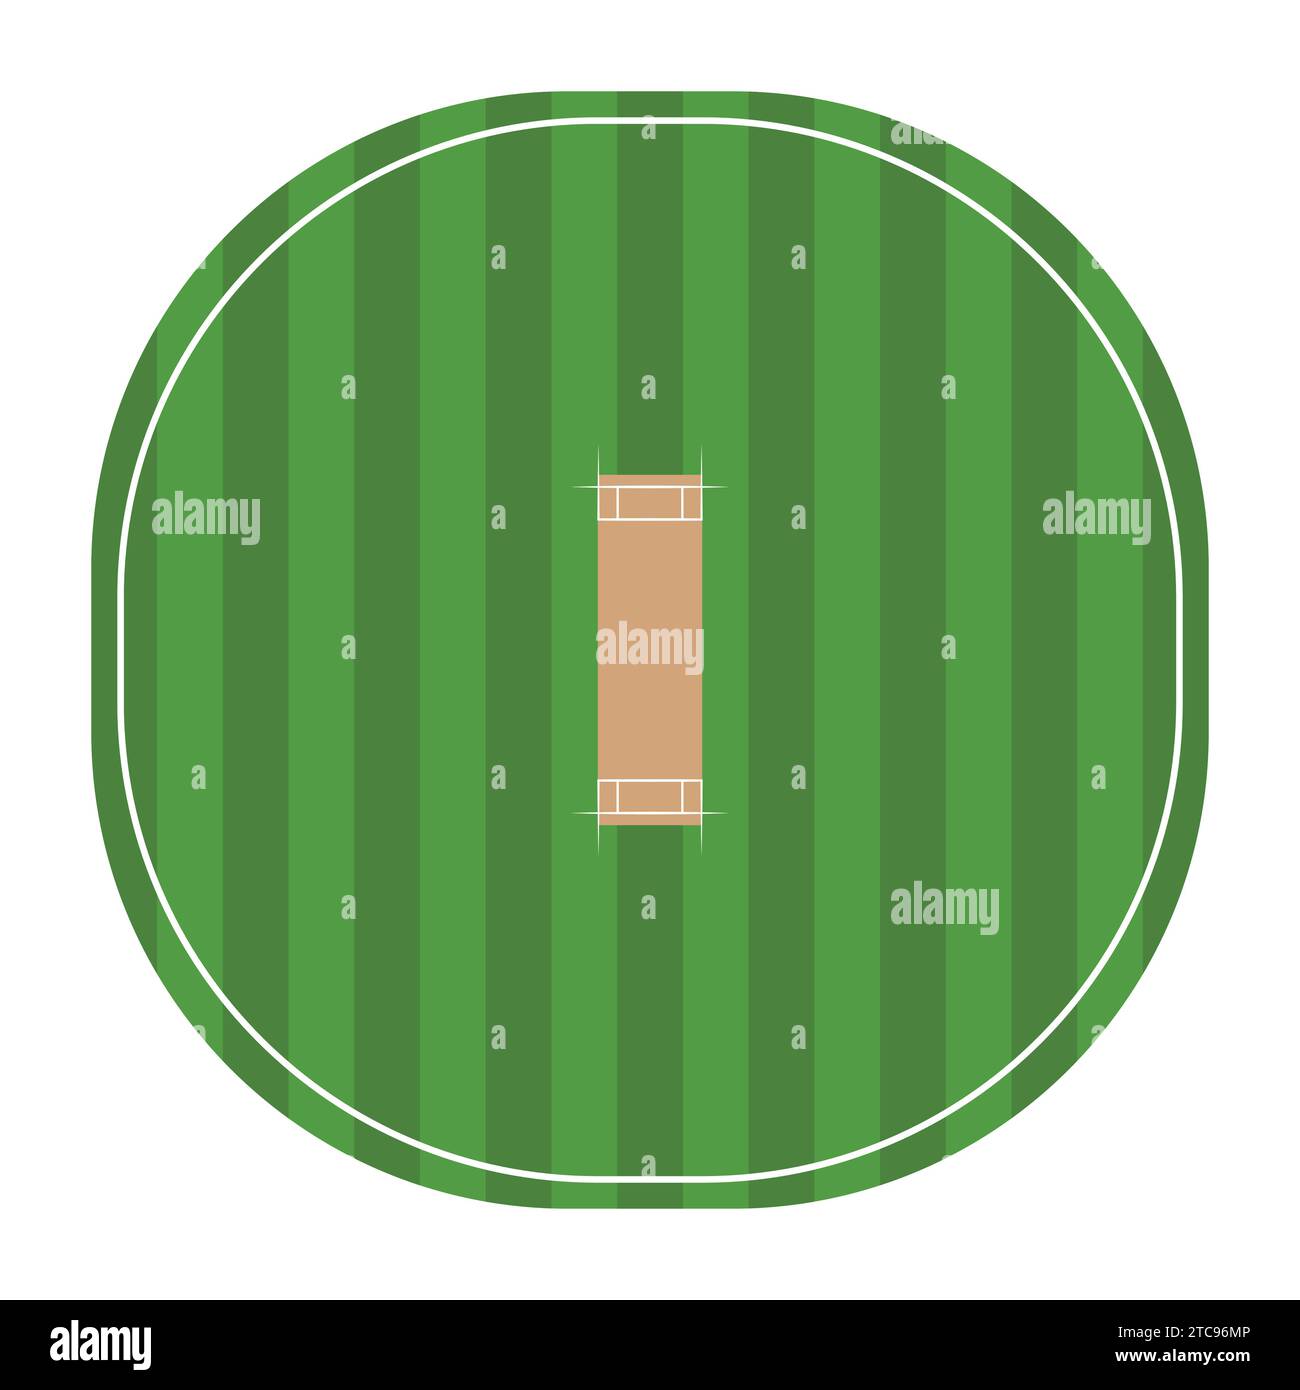 Flat Cricket Ground Pitch Vector Illustration vue de dessus icône Cricket Ground Illustration de Vecteur